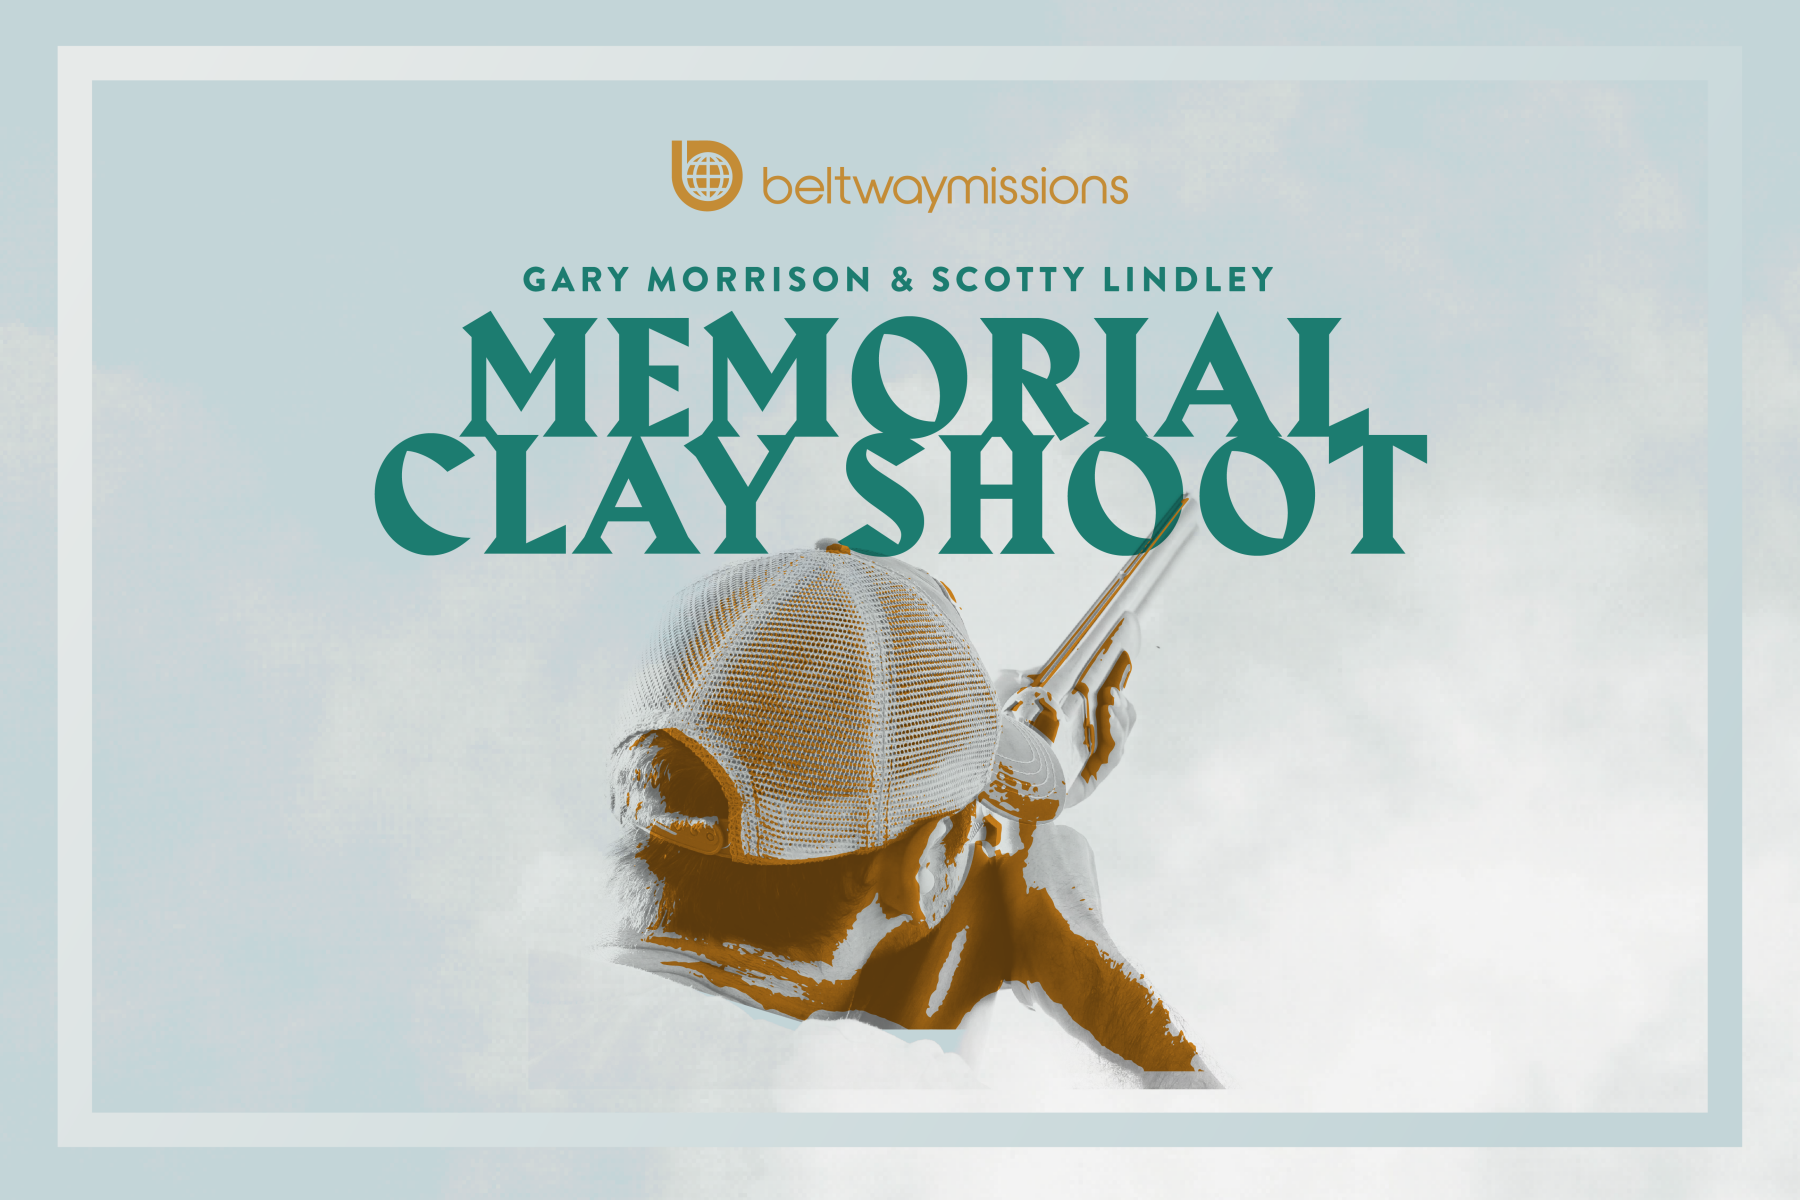 Gary Morrison & Scotty Lindley Memorial Clay Shoot